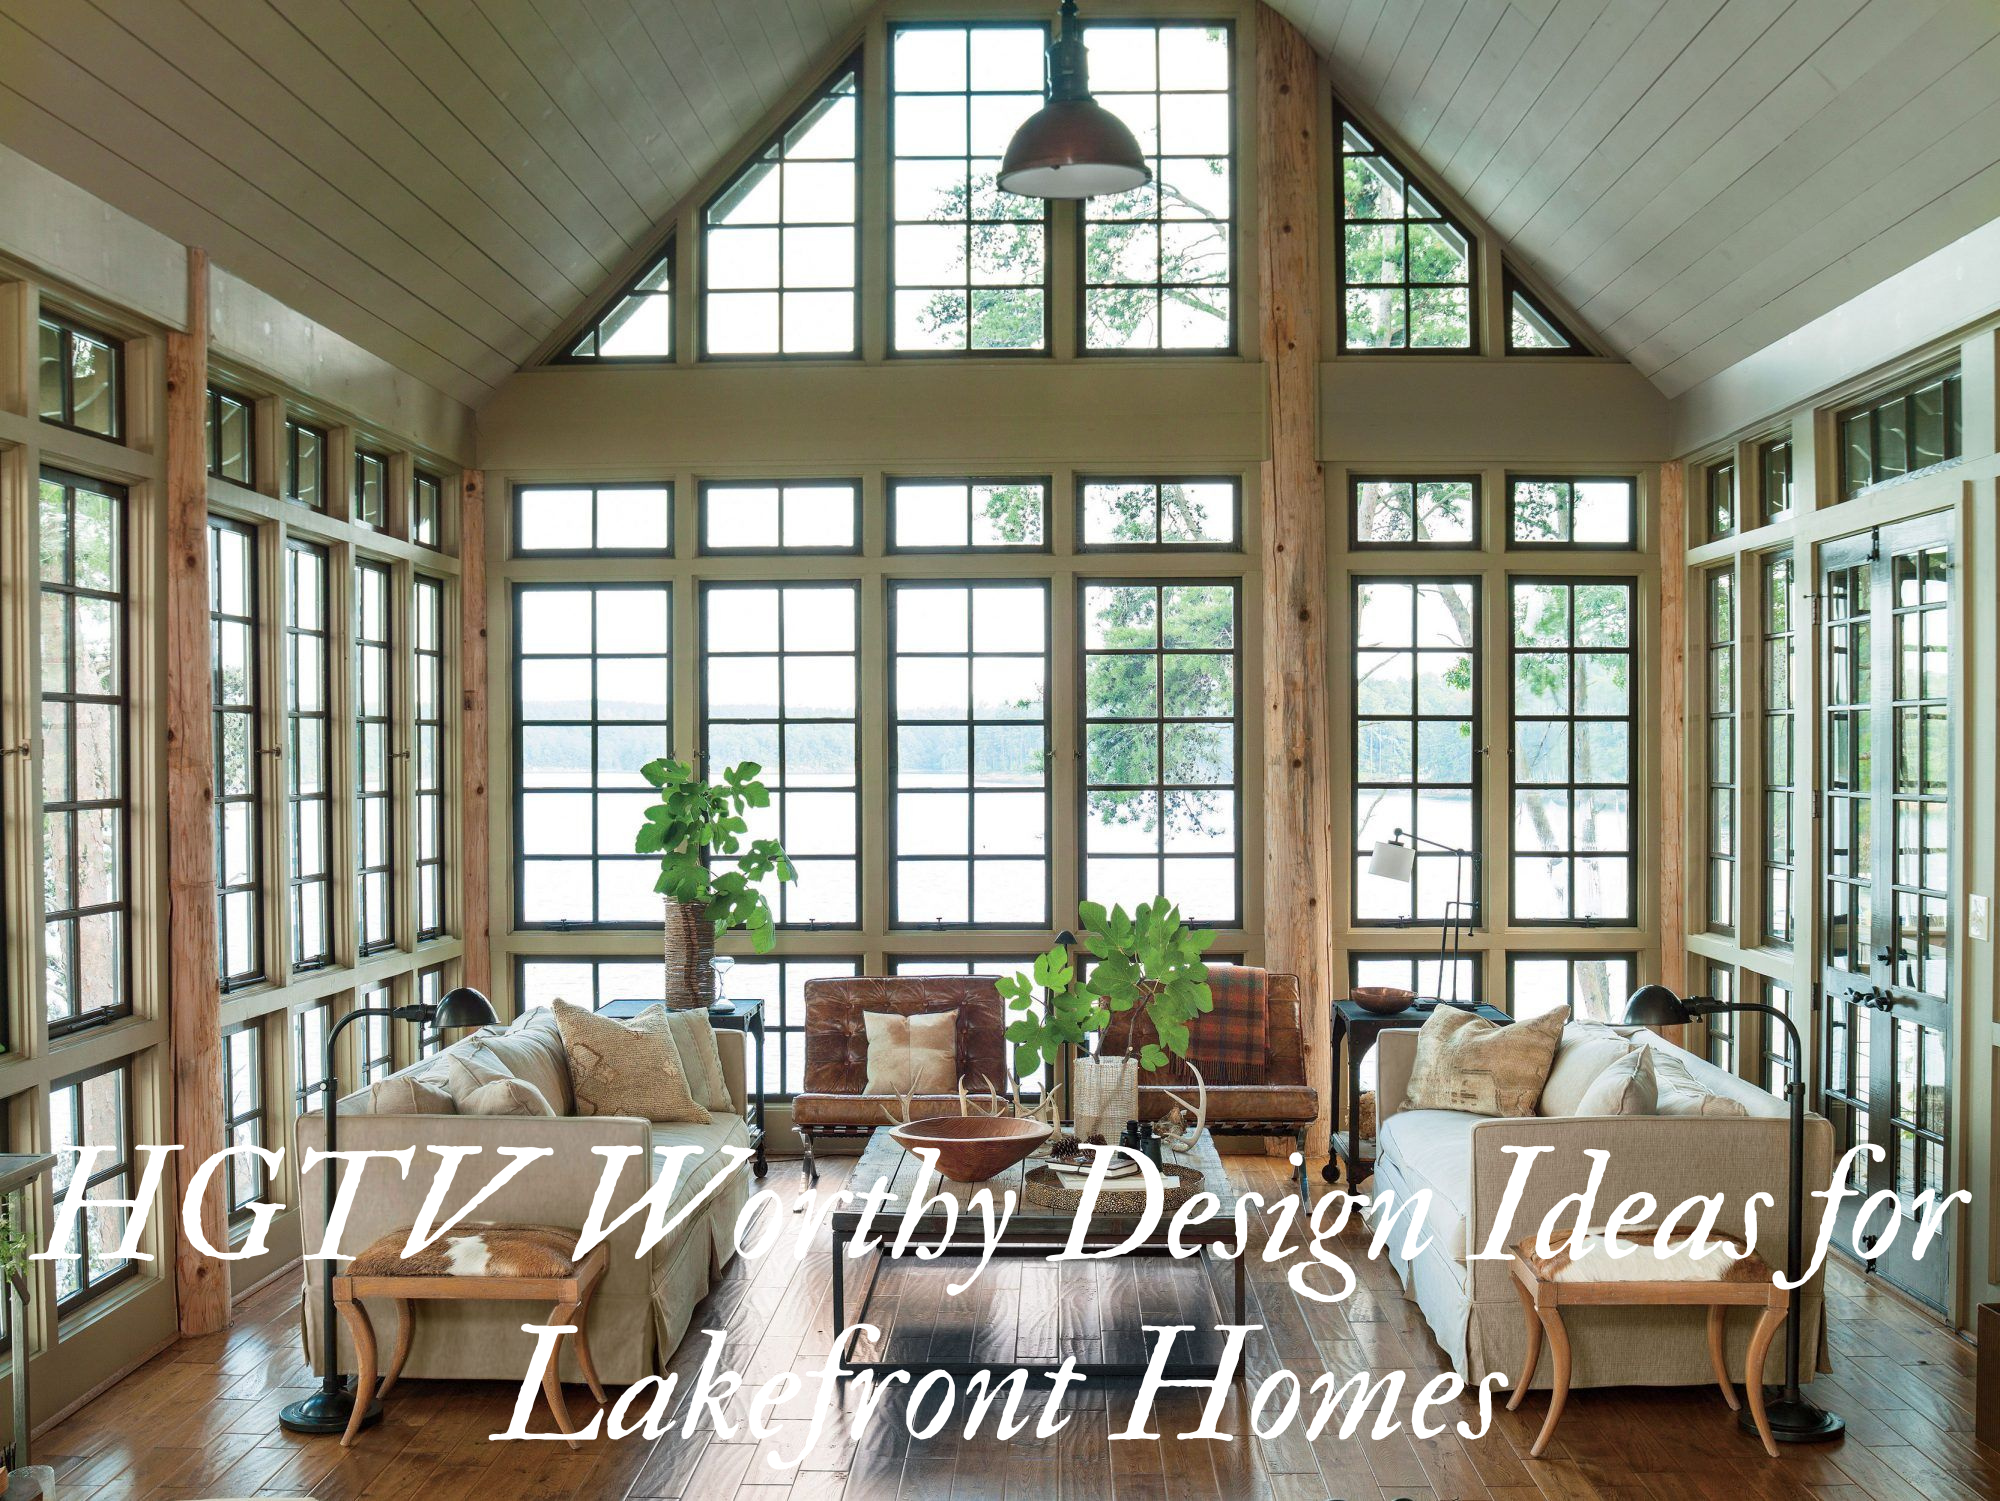 HGTV Worthy Design Ideas for Lakefront Homes - Lakefront Living